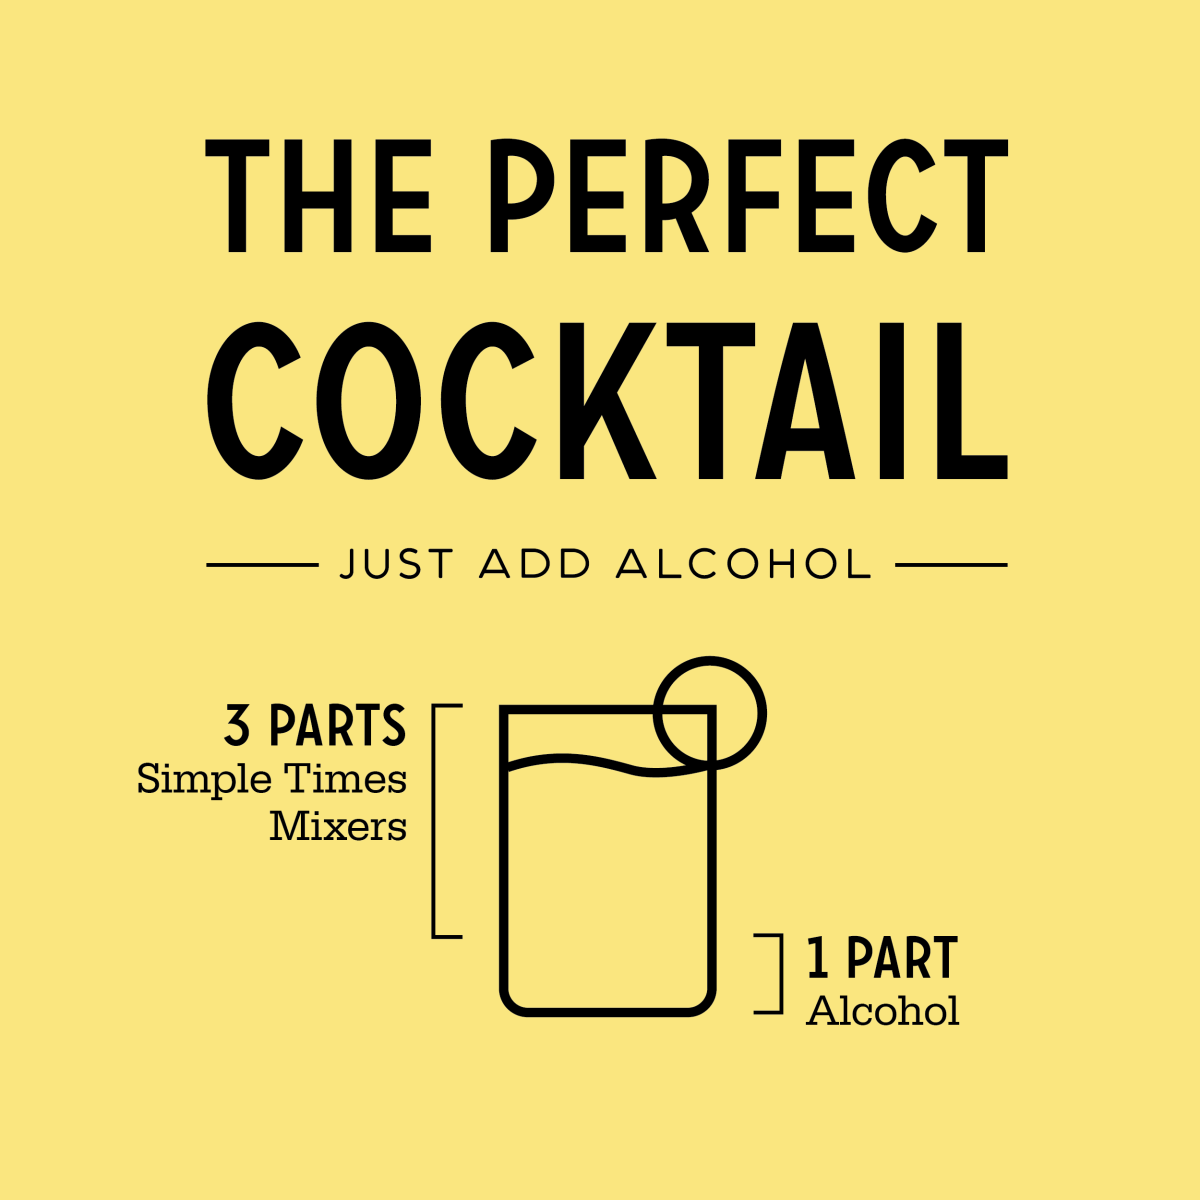 Cocktail Mixers - Alcohol Mixers - Simple Times Mixers - Blueberry Basil Lemonade